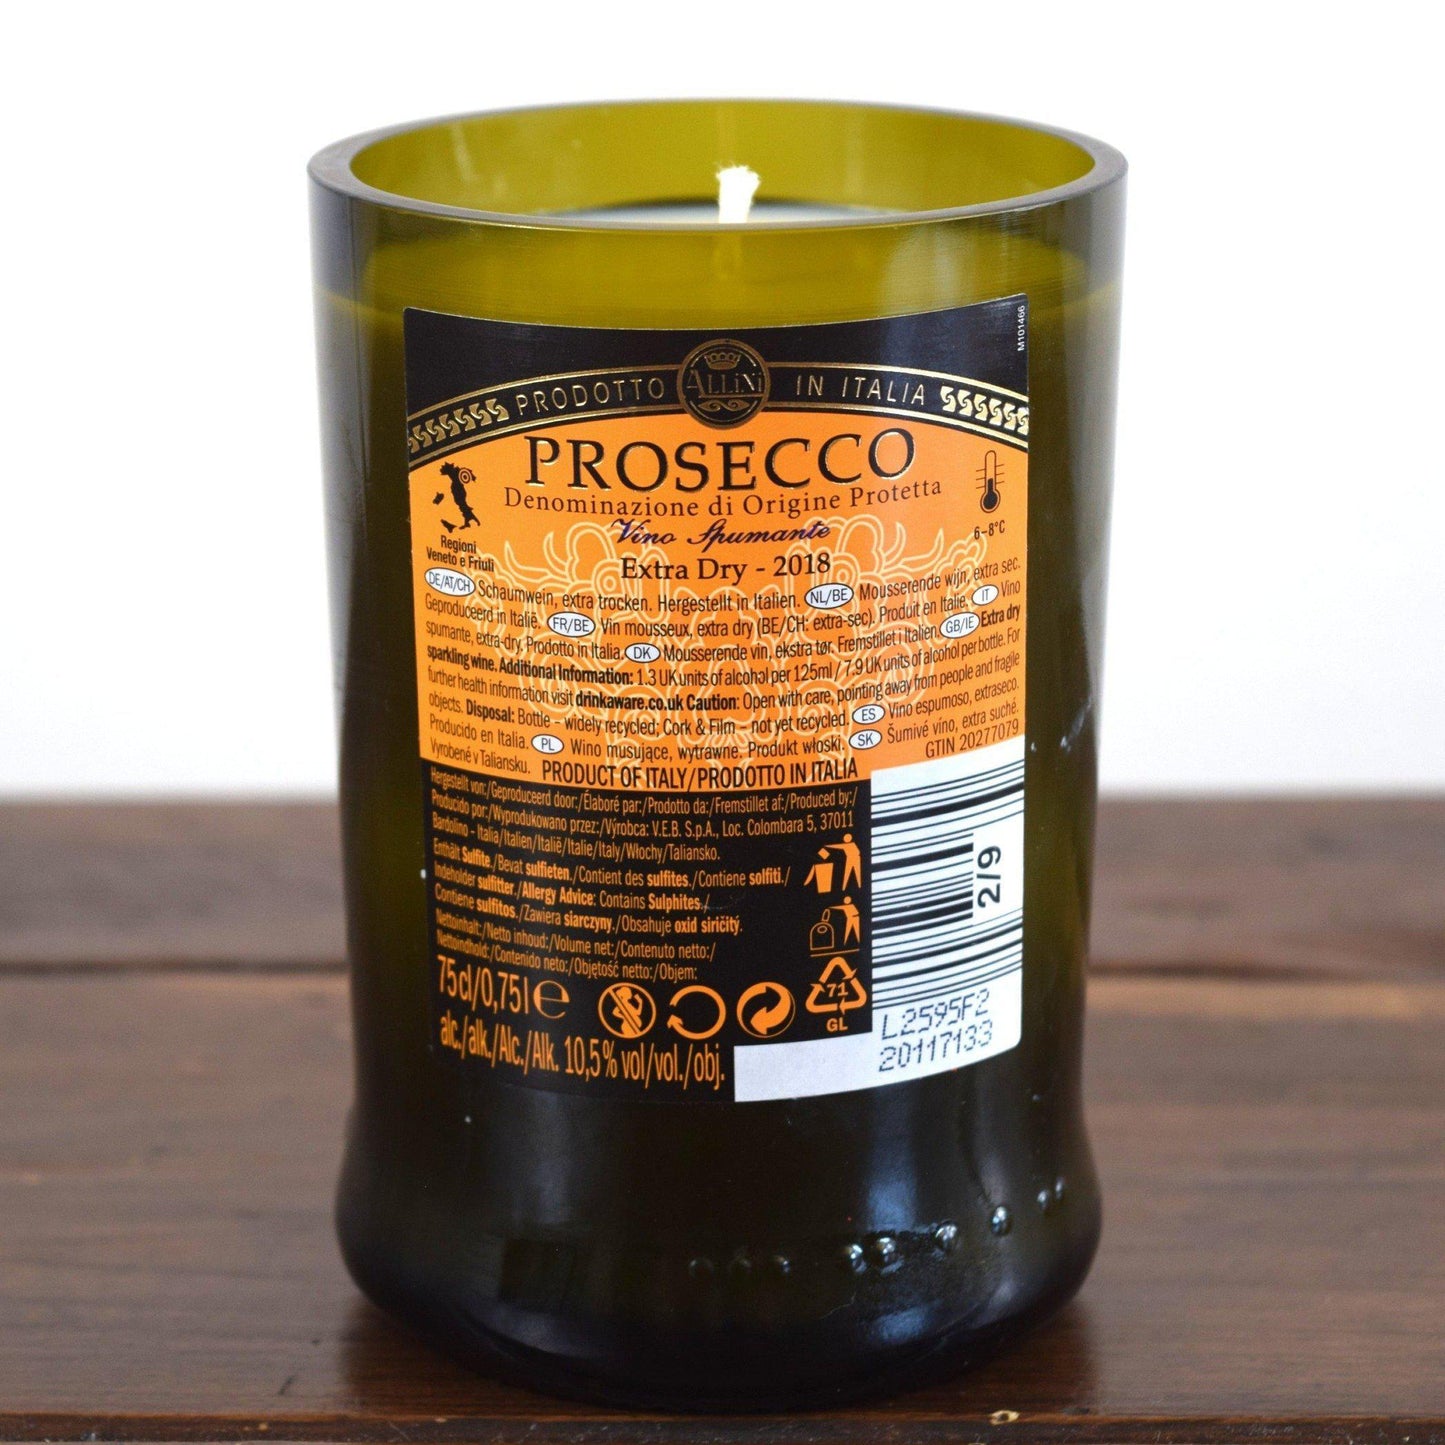 Prosecco Vino Spumante Bottle Candle Wine & Prosecco Bottle Candles Adhock Homeware